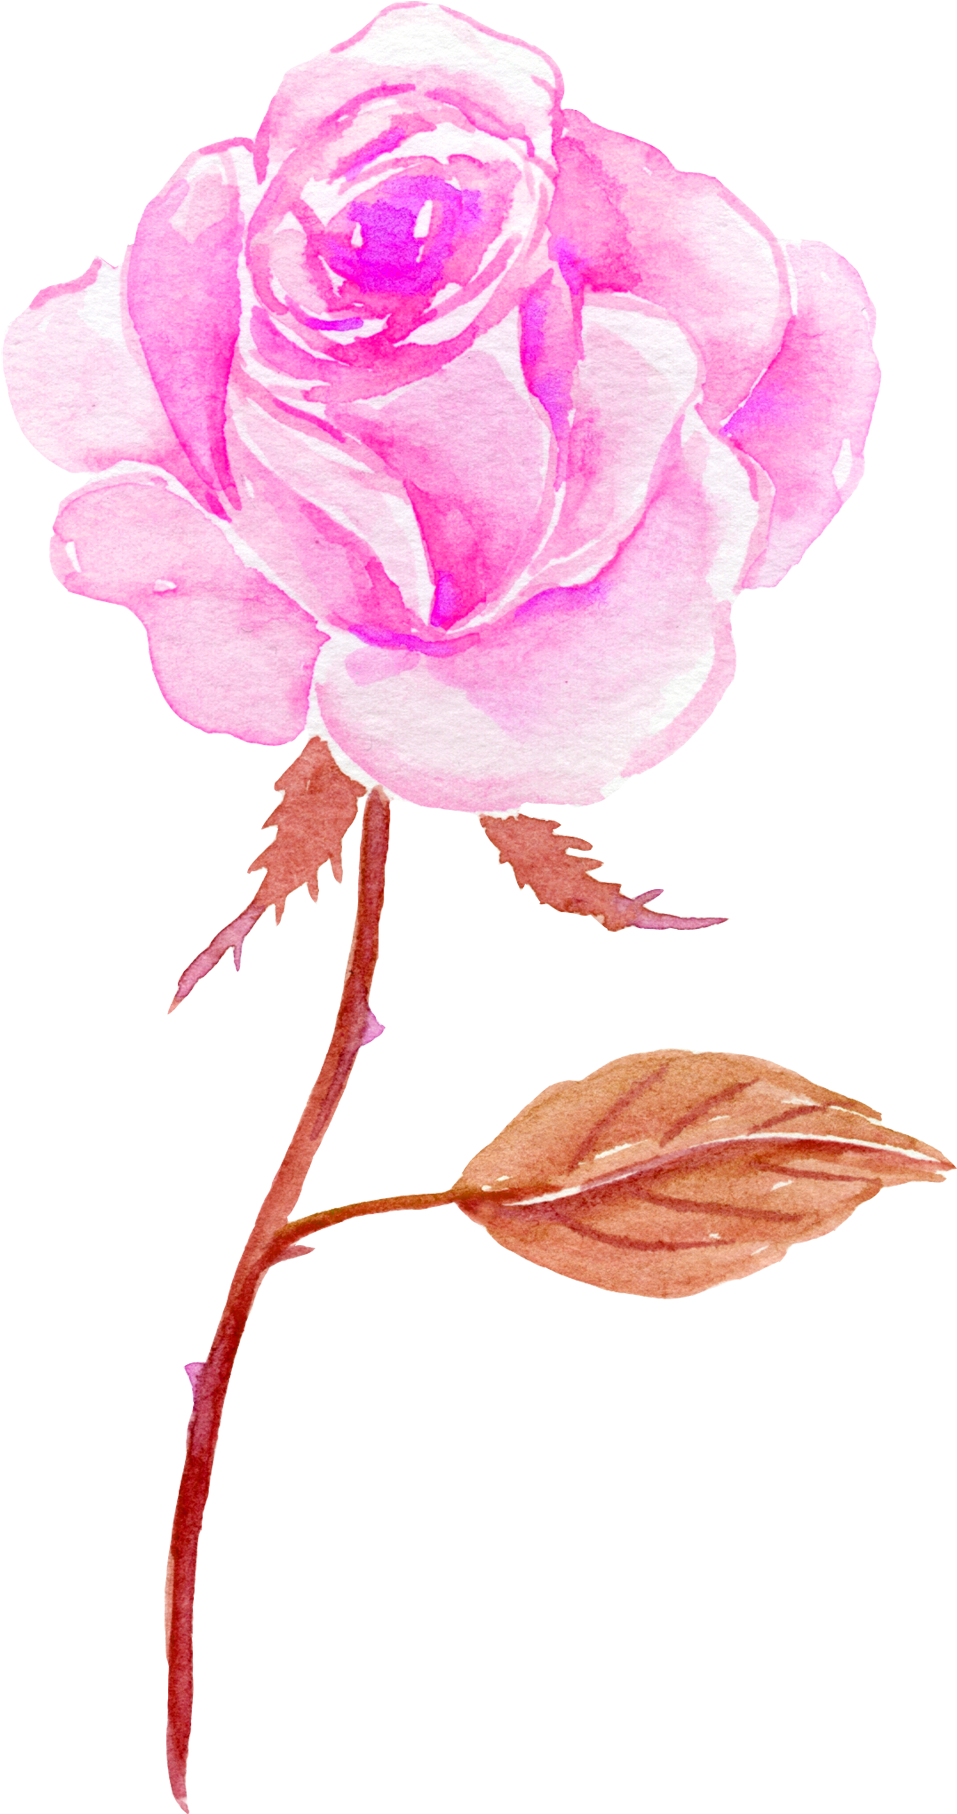 Flower Watercolor Painting - Flower Watercolor Painting (1000x1820)